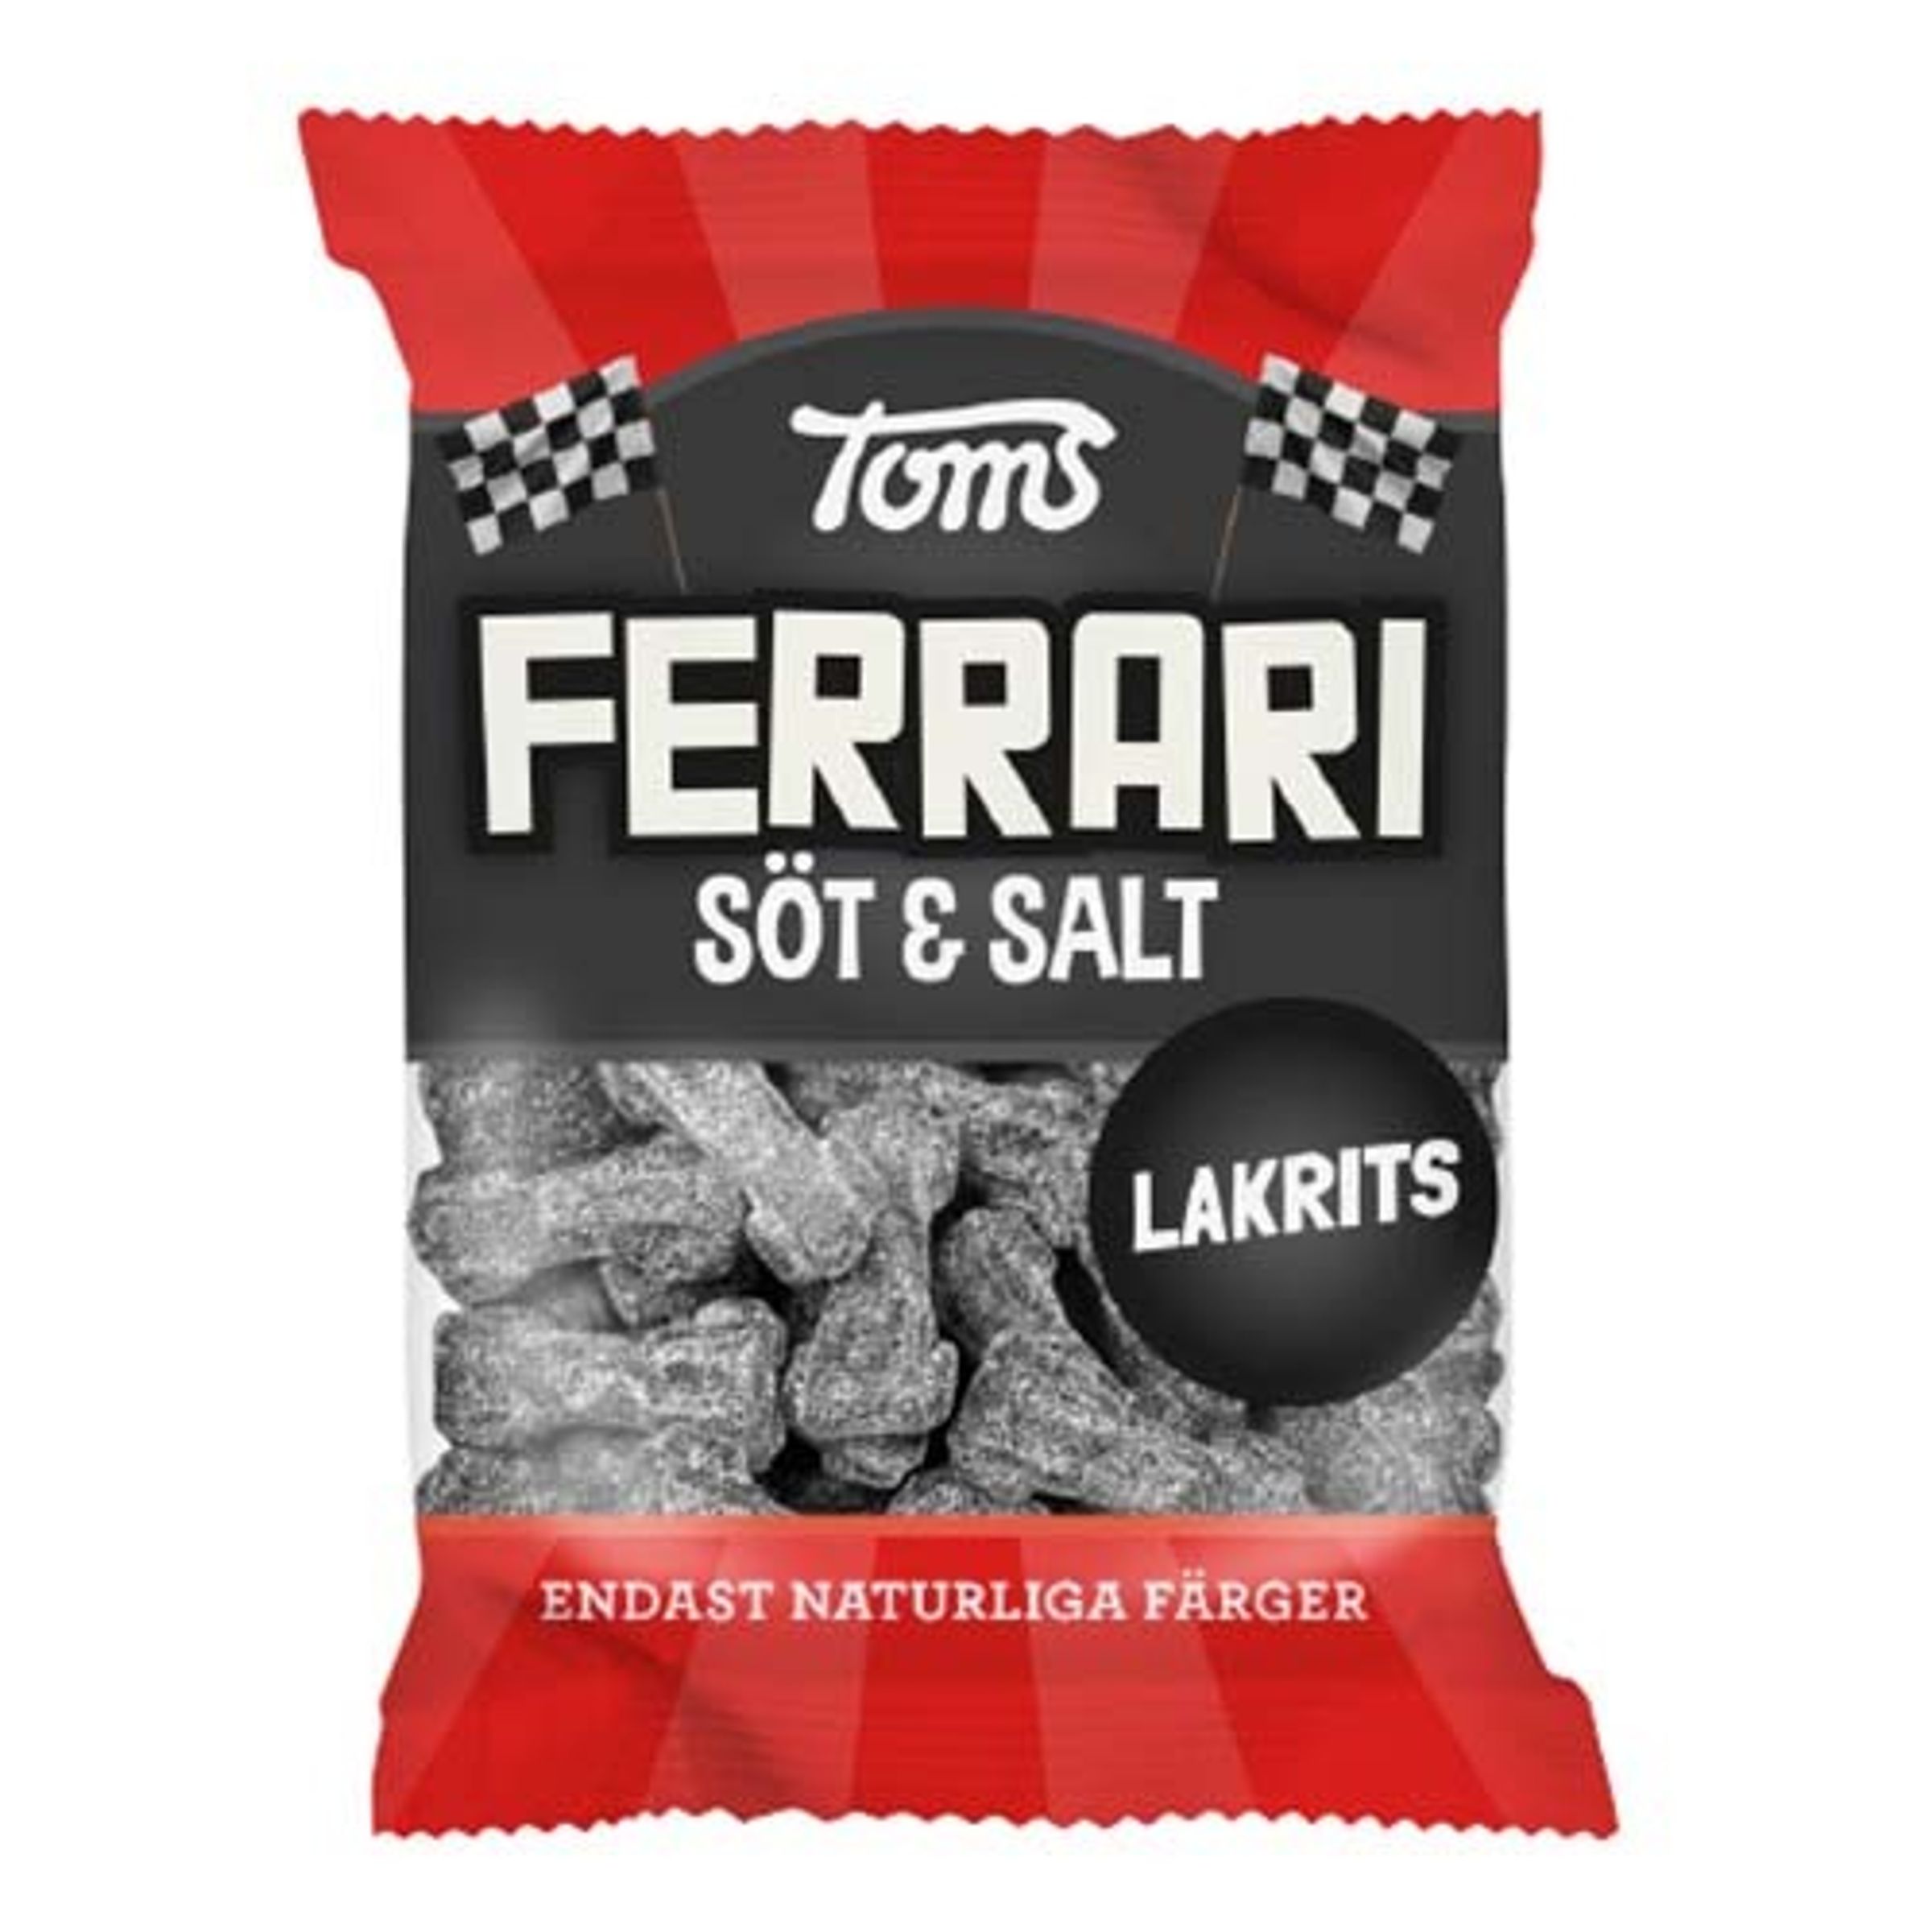 Ferrari Söt & Salt